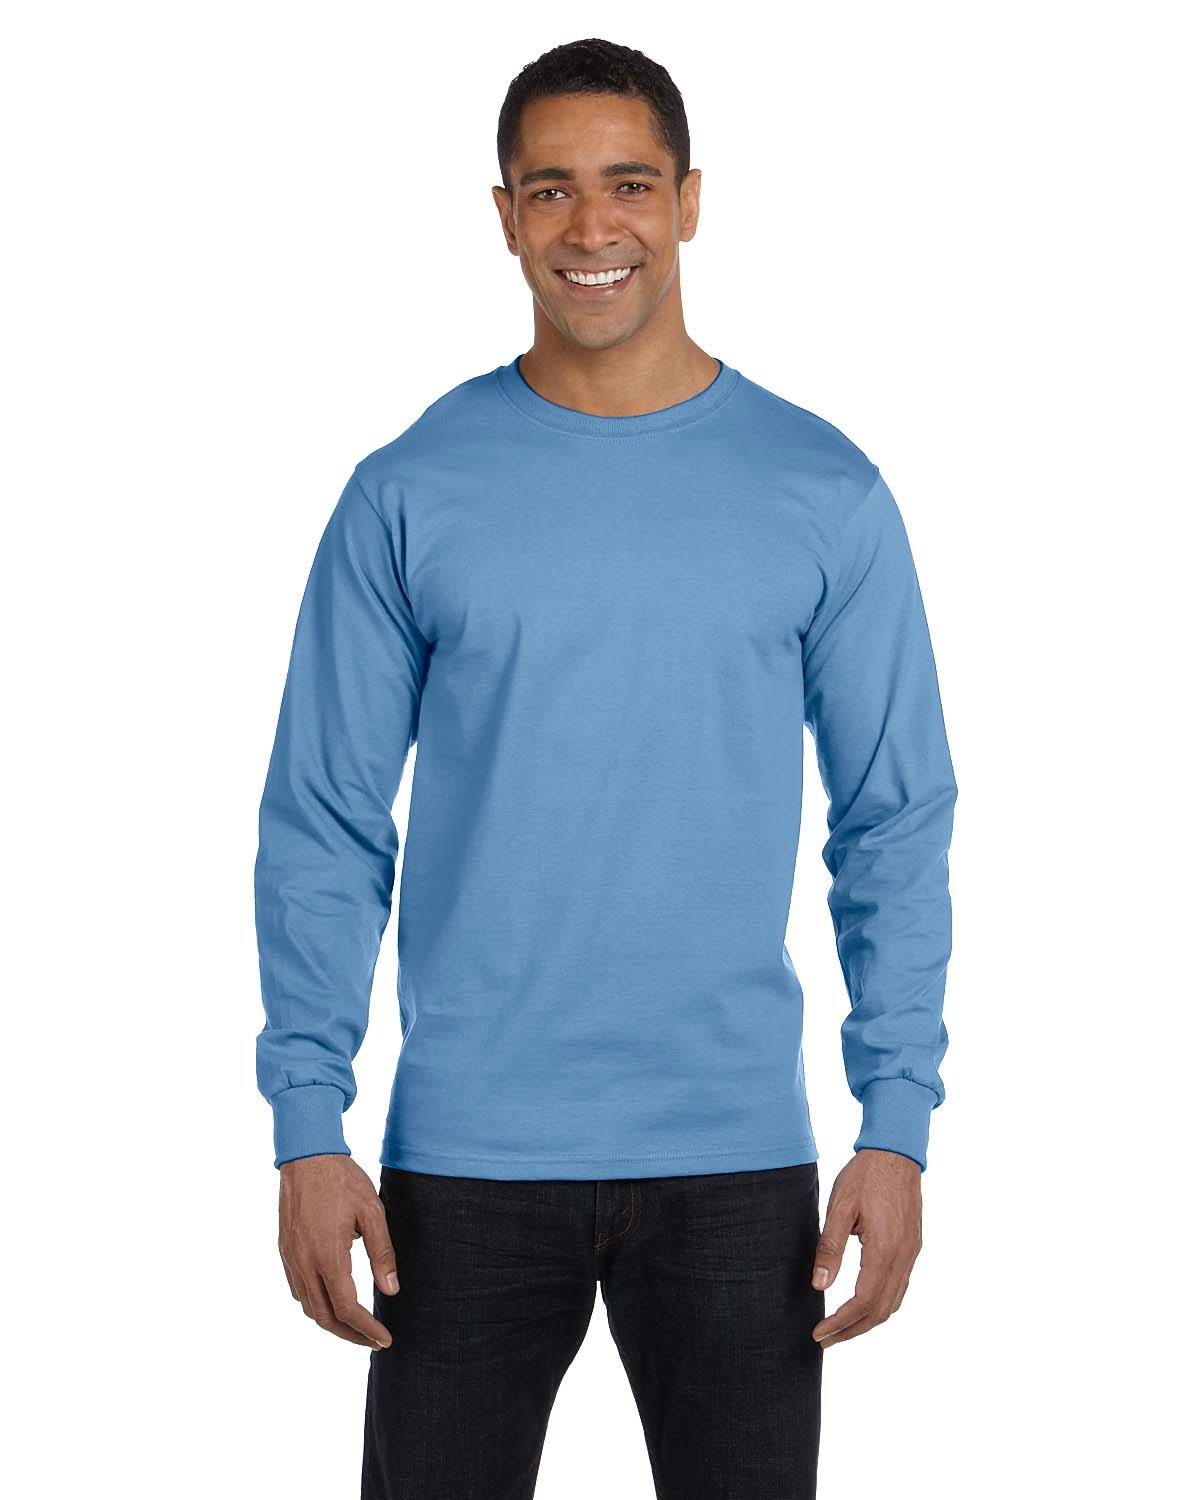 Sublimation on 50% Polyester 50% Cotton Blend Gildan Sweatshirt